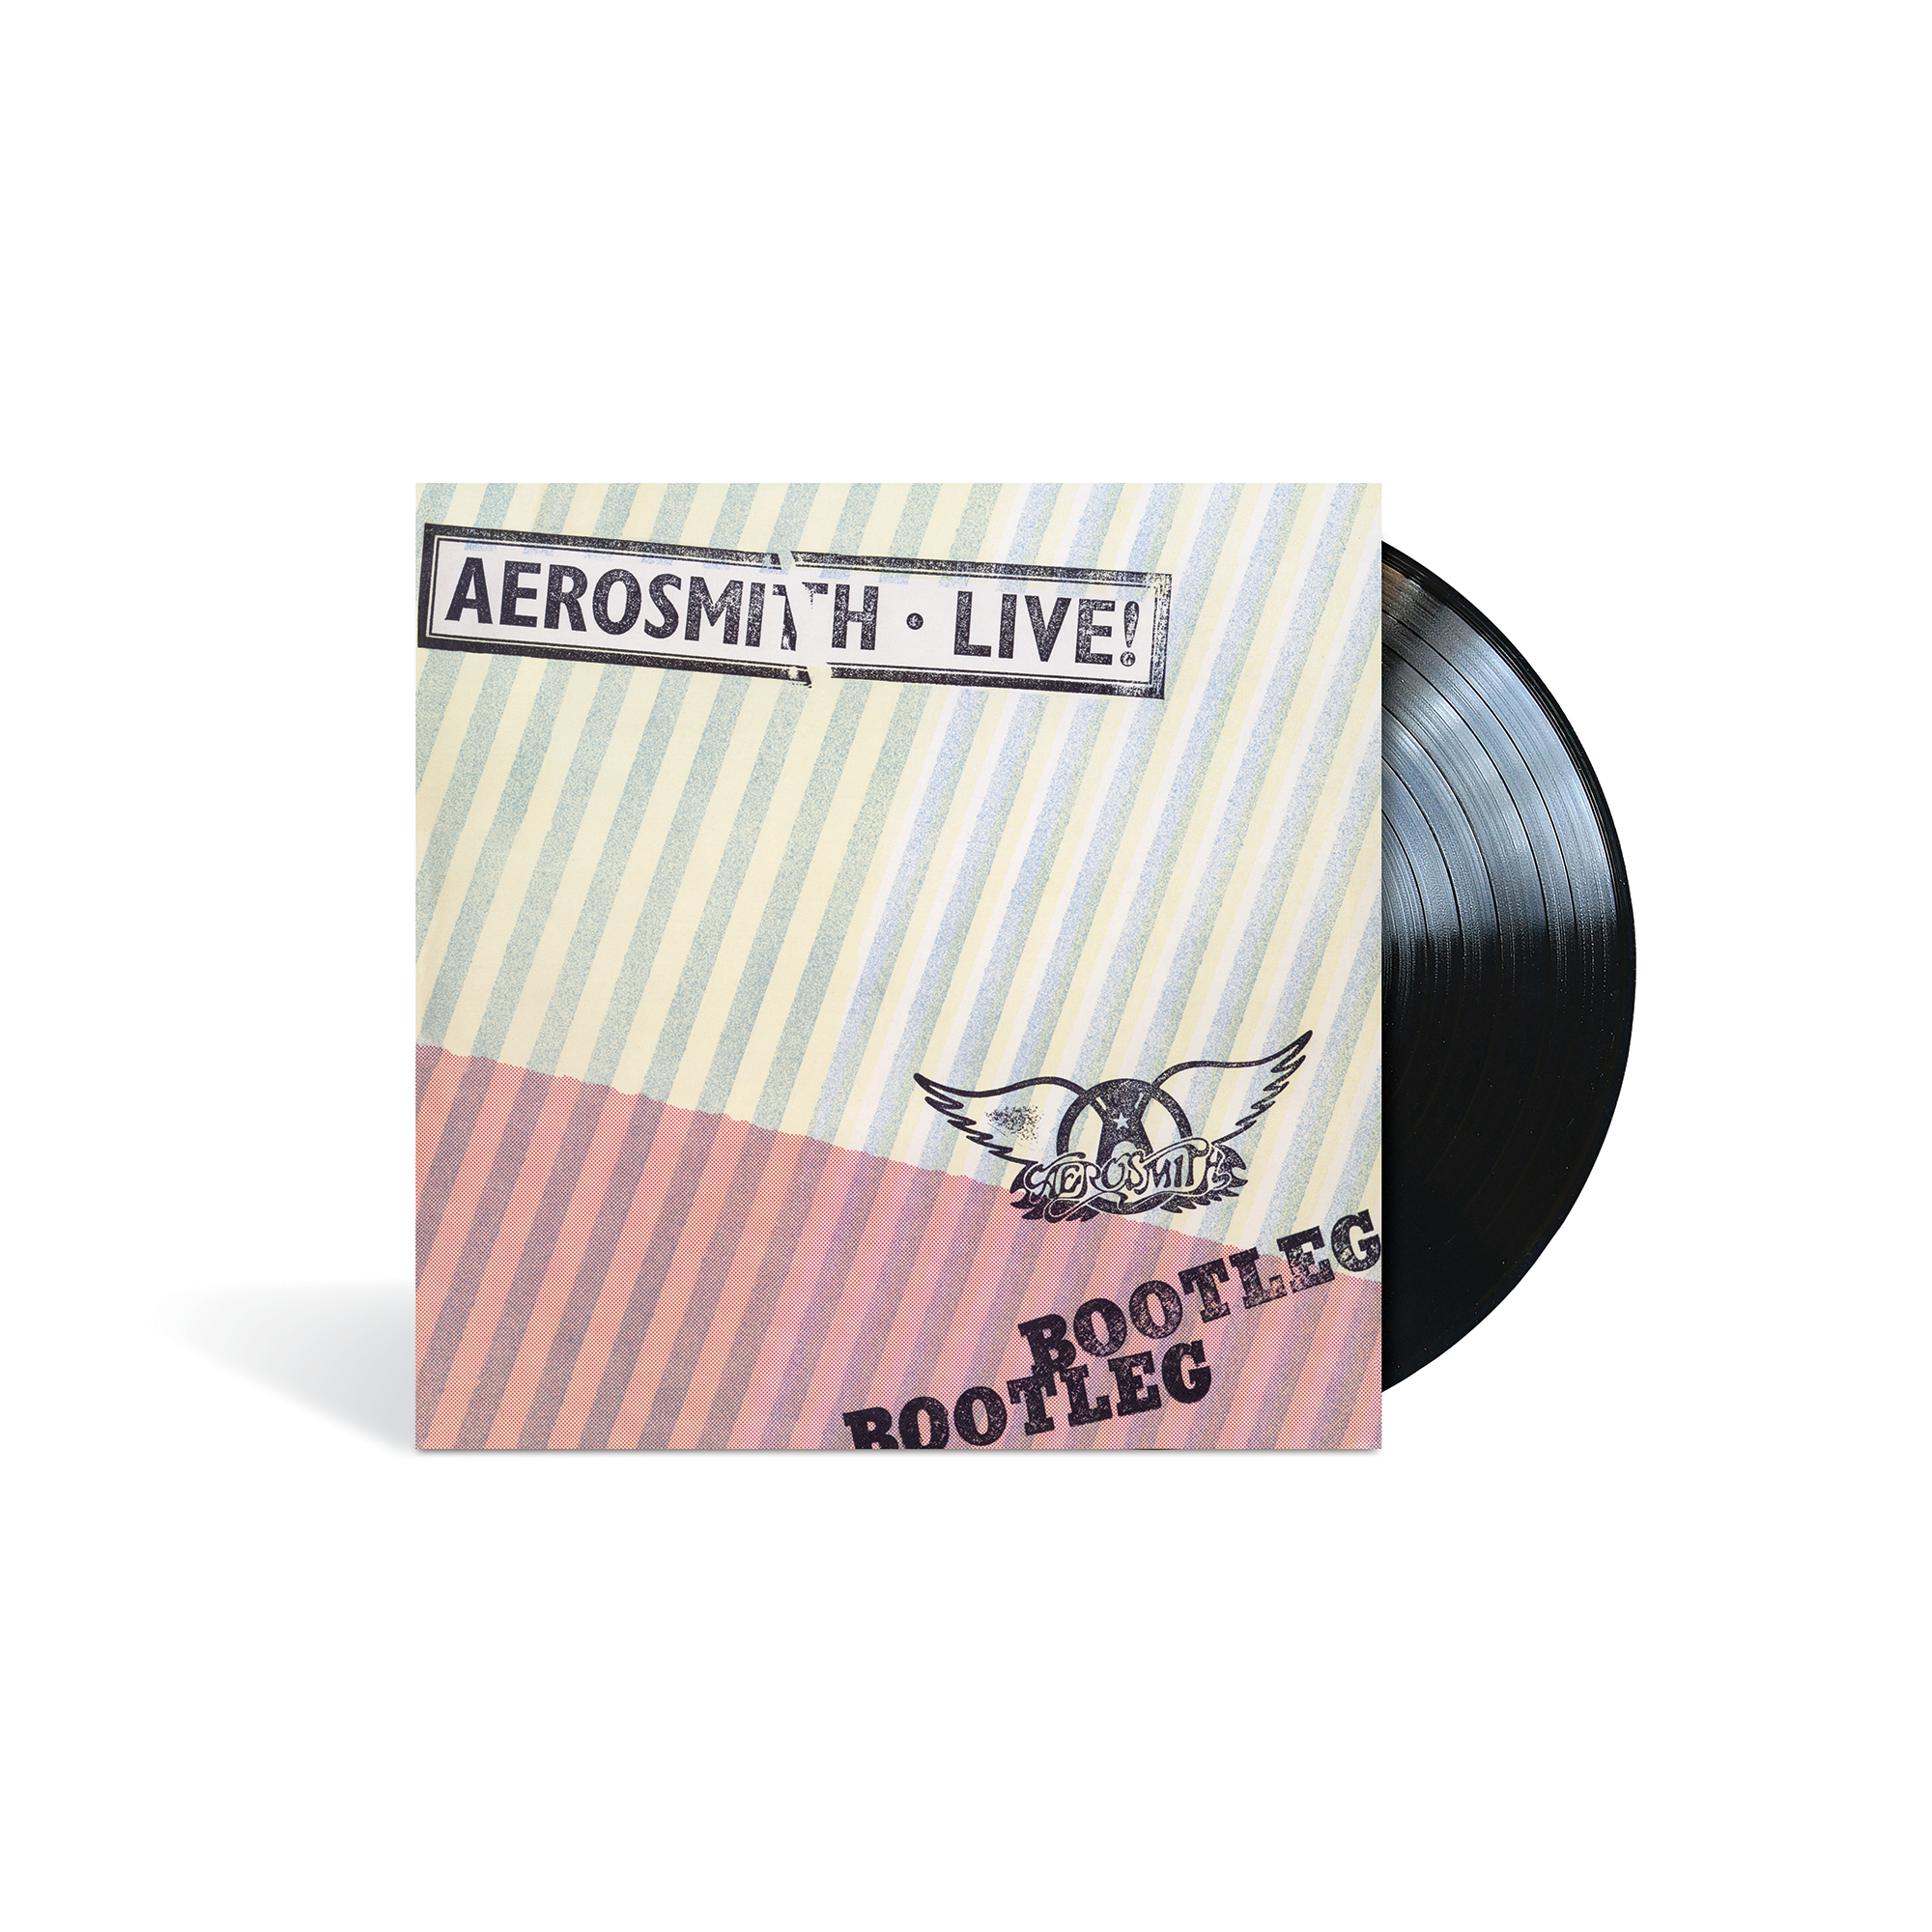 Aerosmith - Live! Bootleg (2LP)